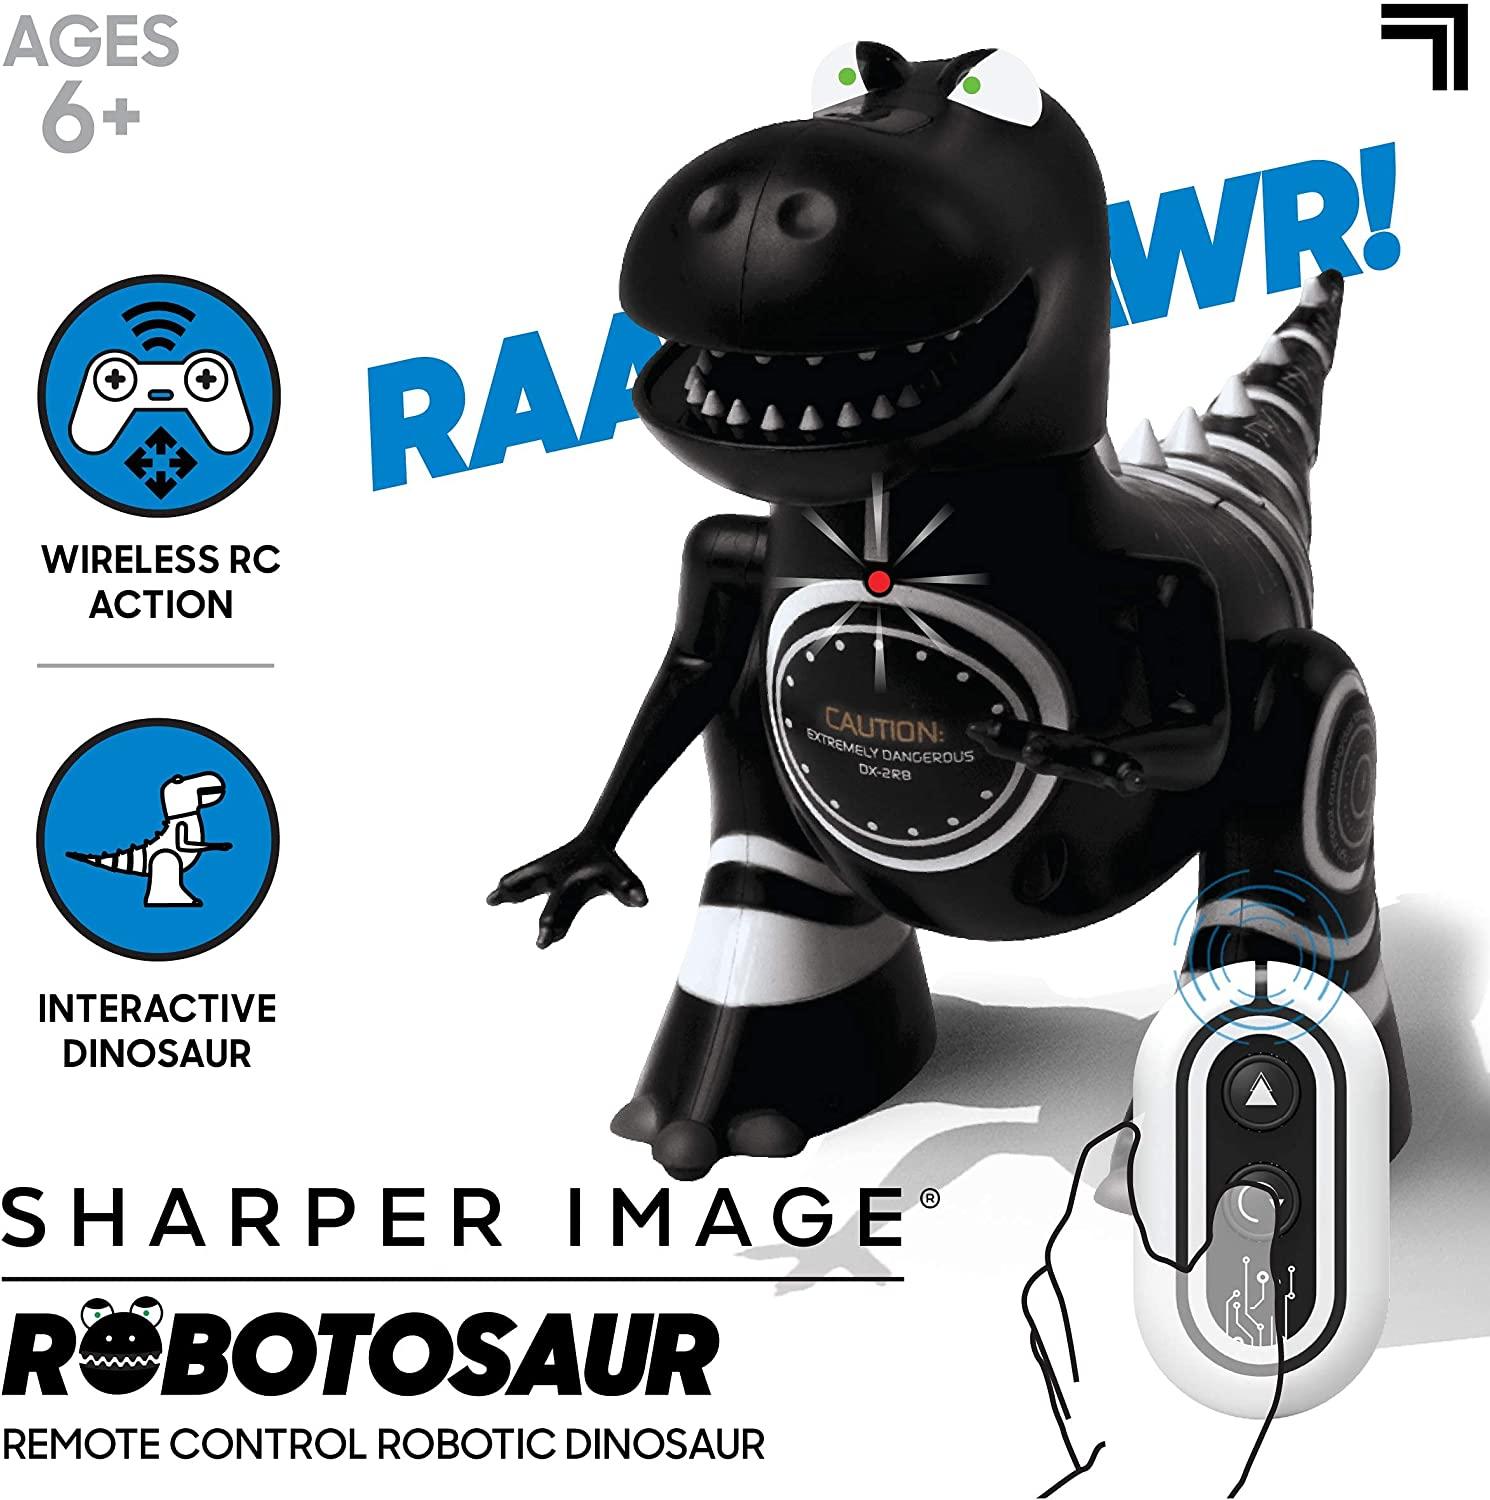 Robotosaur mini img 2